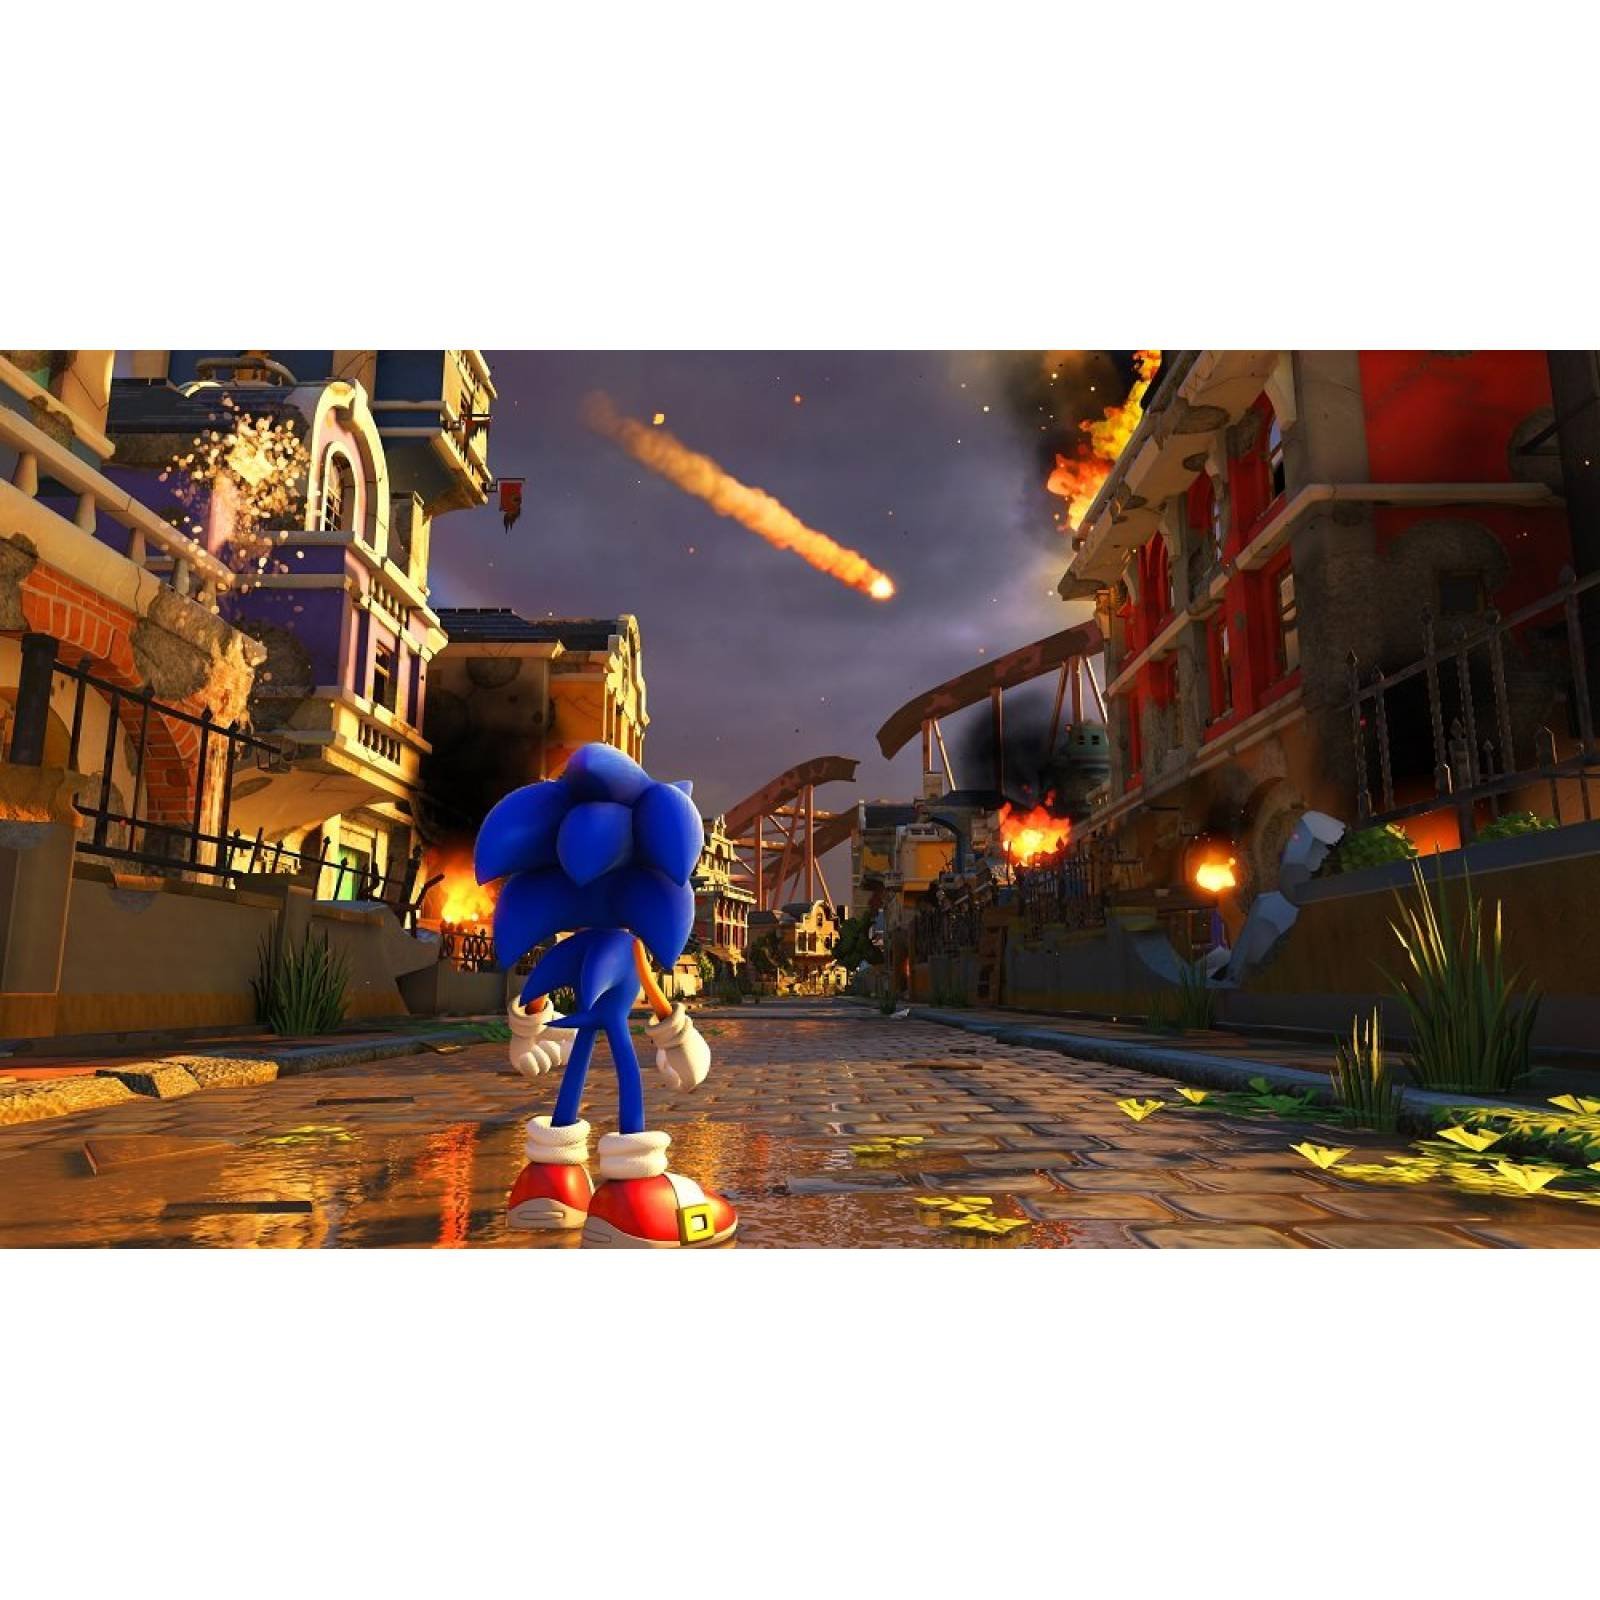 Juego Sonic Forces para PlayStation 4